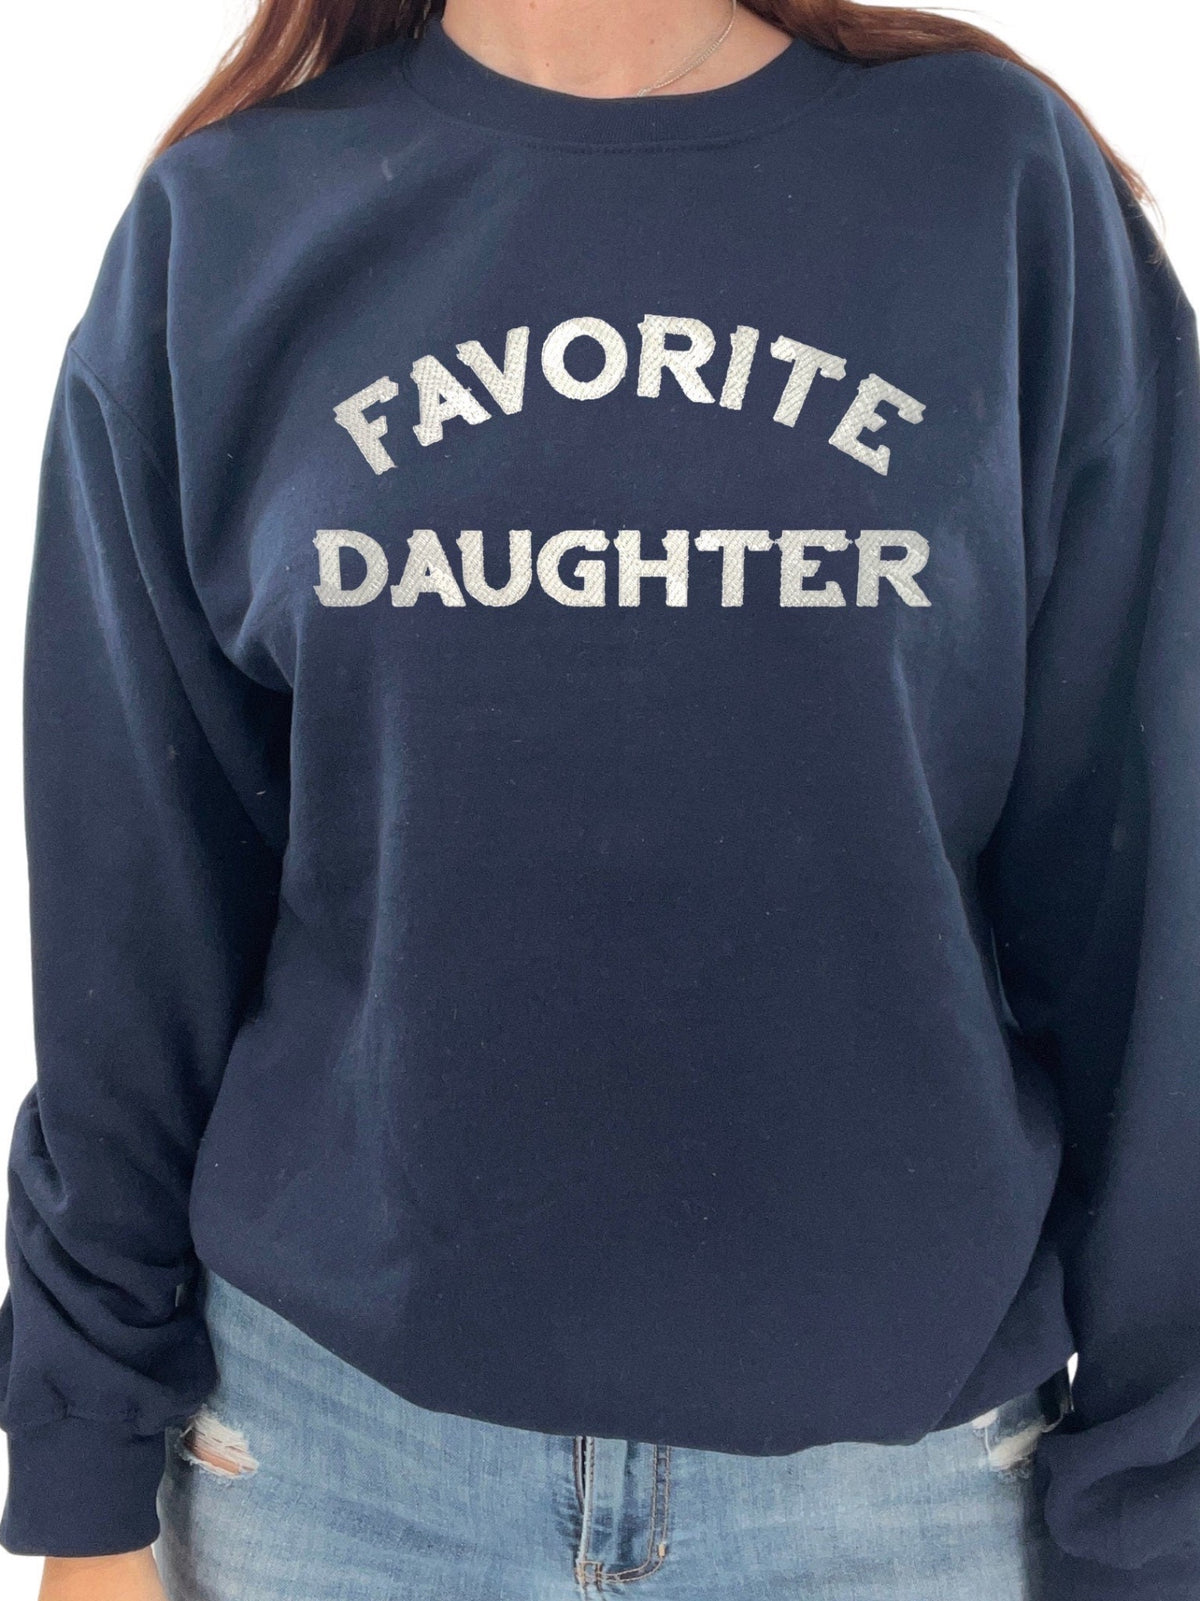 Favorite Daughter Embroidered Crewneck